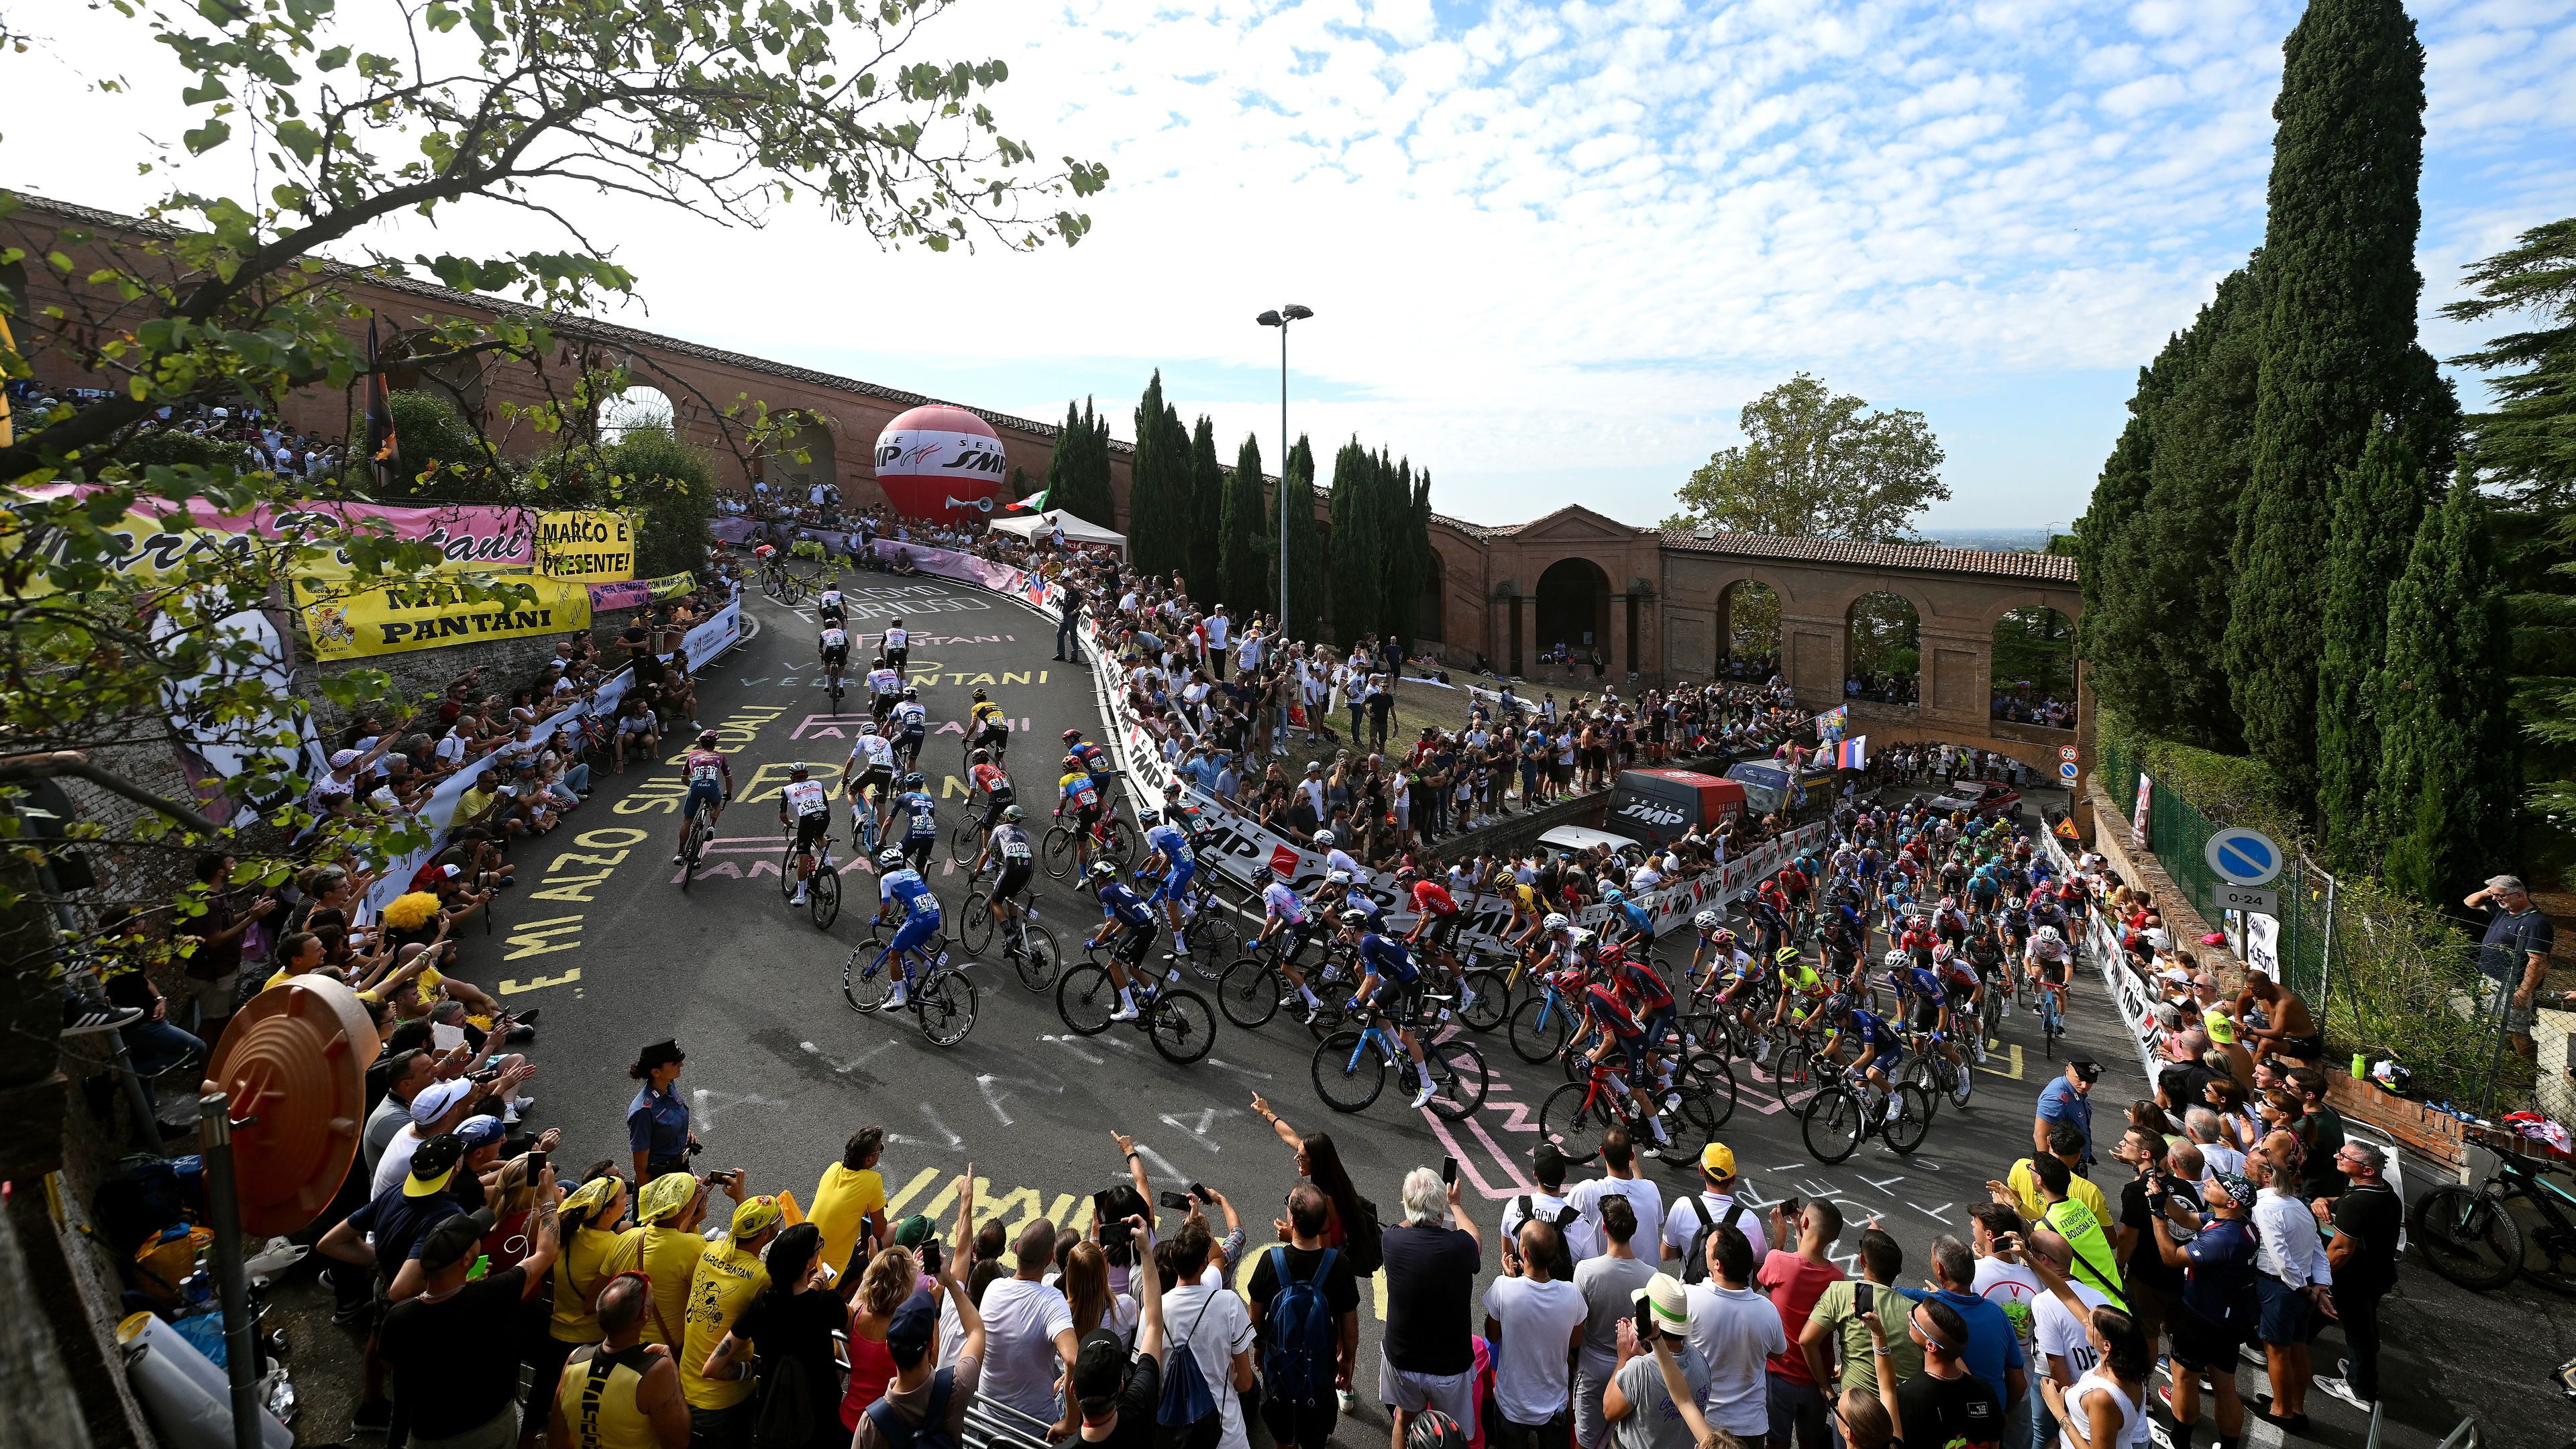 Torinóból indul a Giro d'Italia jövő évi versenye